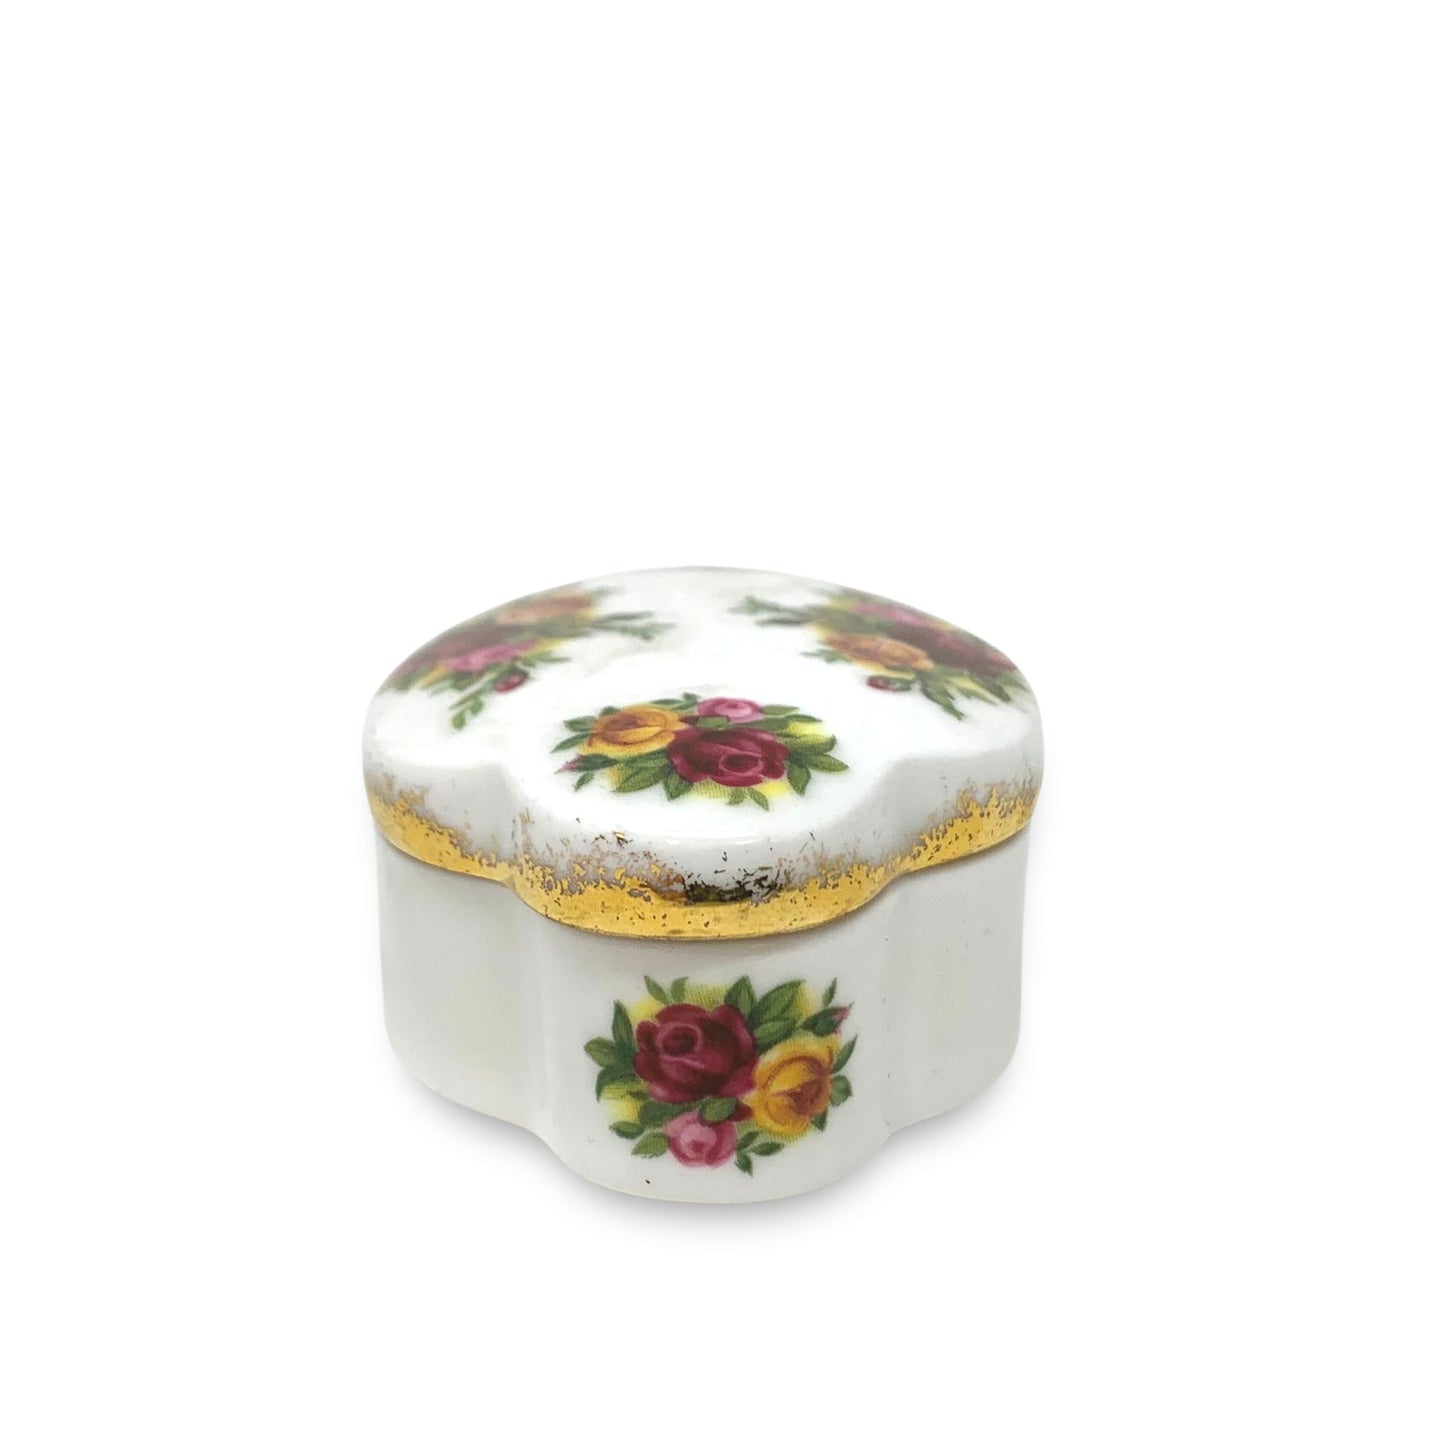 Royal Albert "Old Country Roses" Bone China Trinket Box